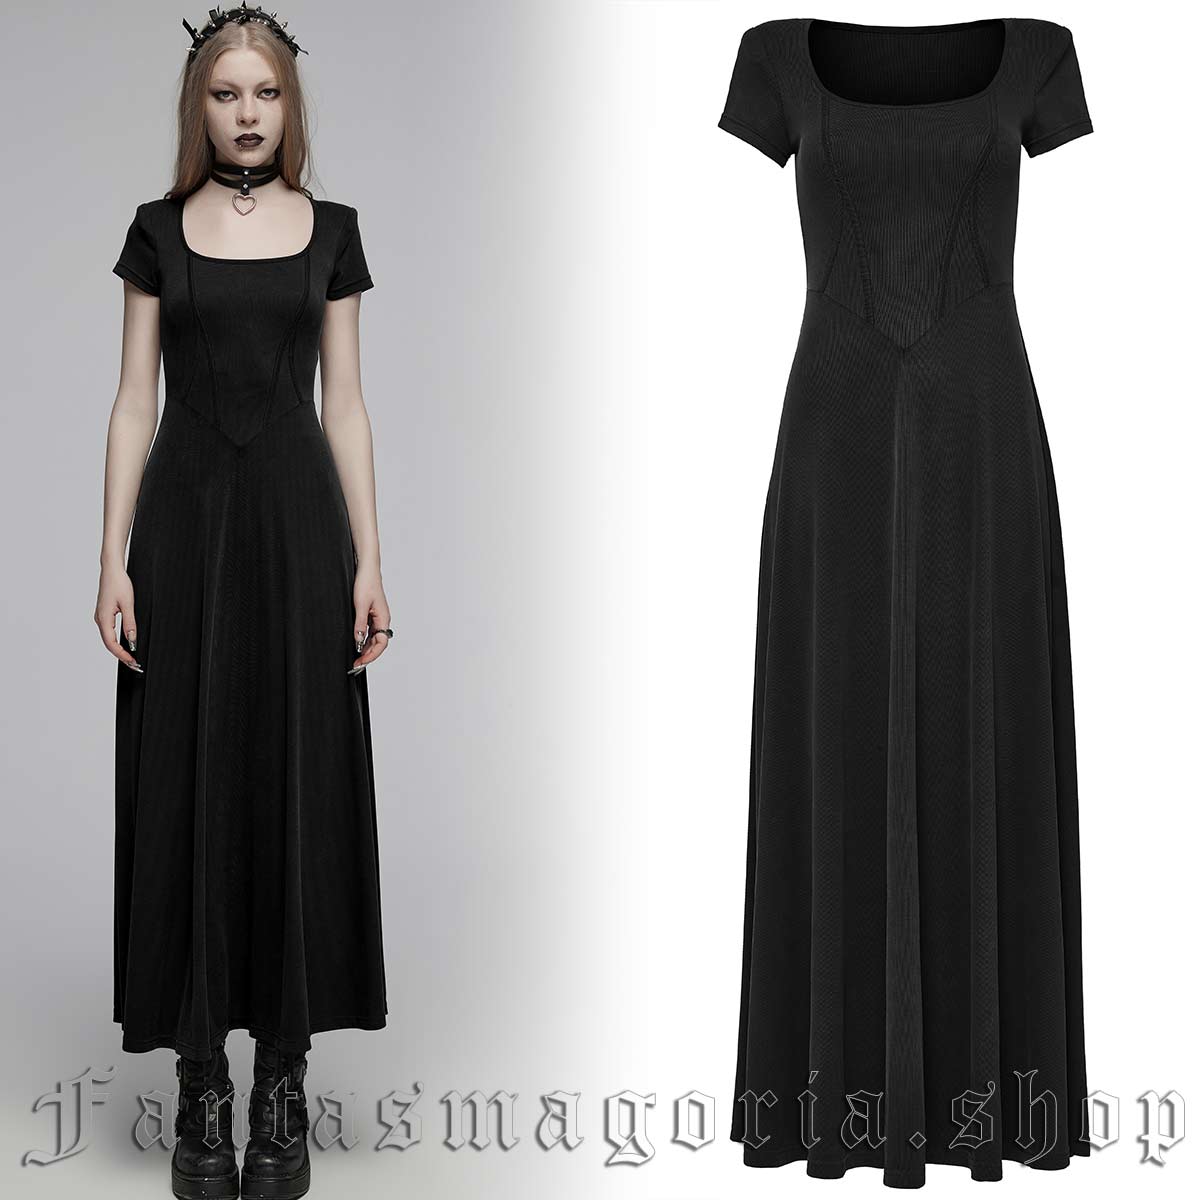 Black short sleeve square neckline long maxi dress. - Punk Rave - OPQ-1440/BK